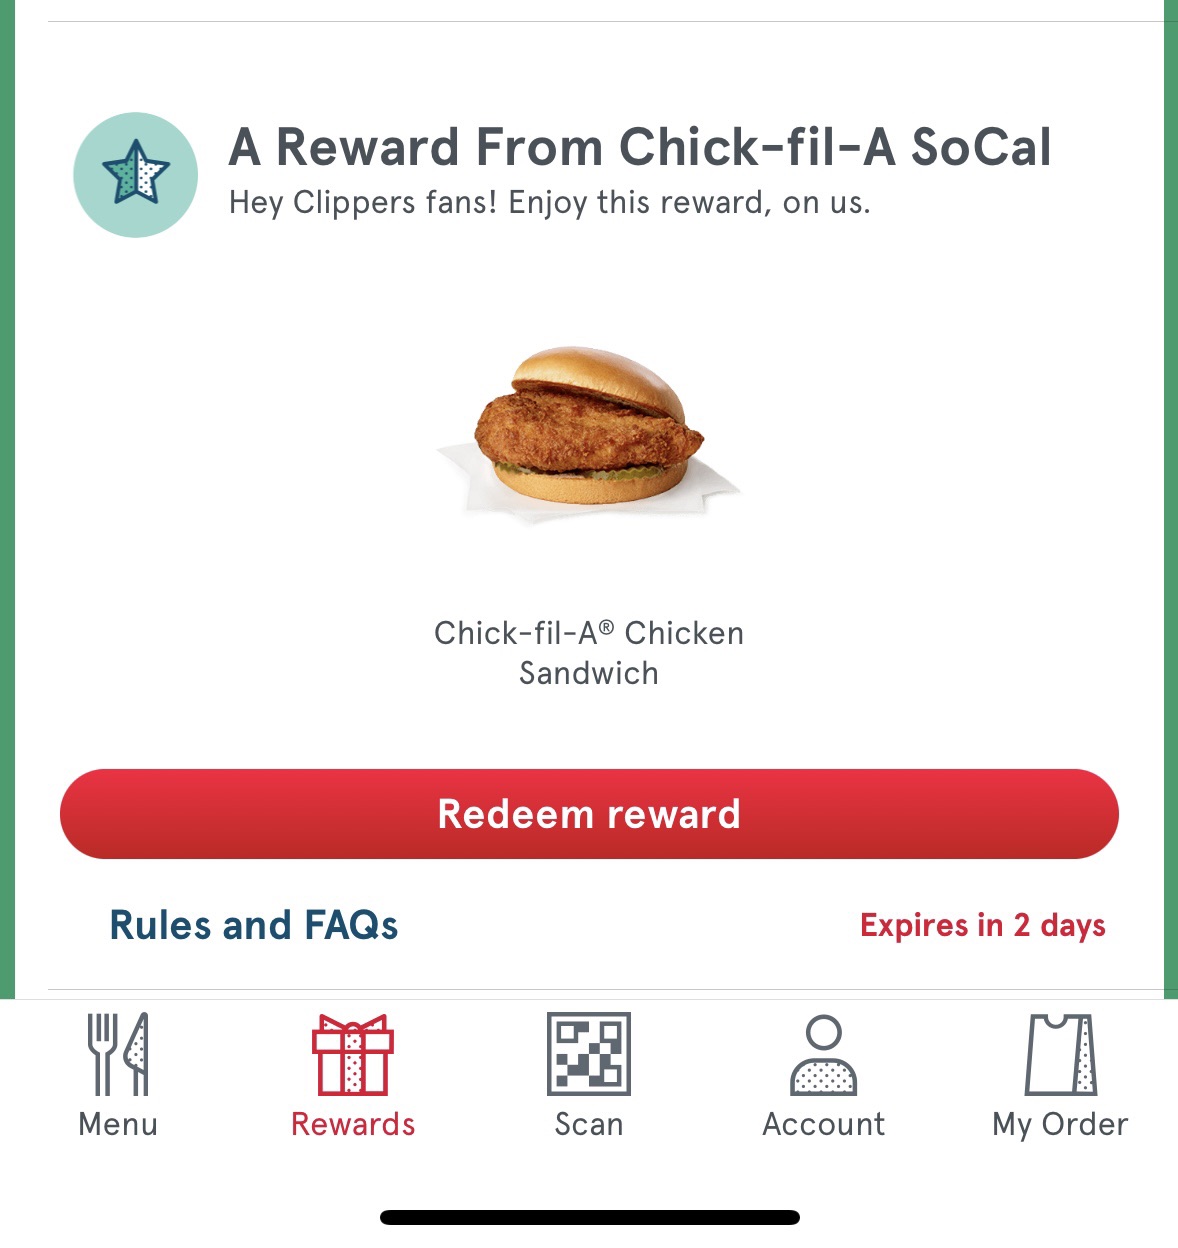 Chick fil a Chicken Sandwiches免费汉堡